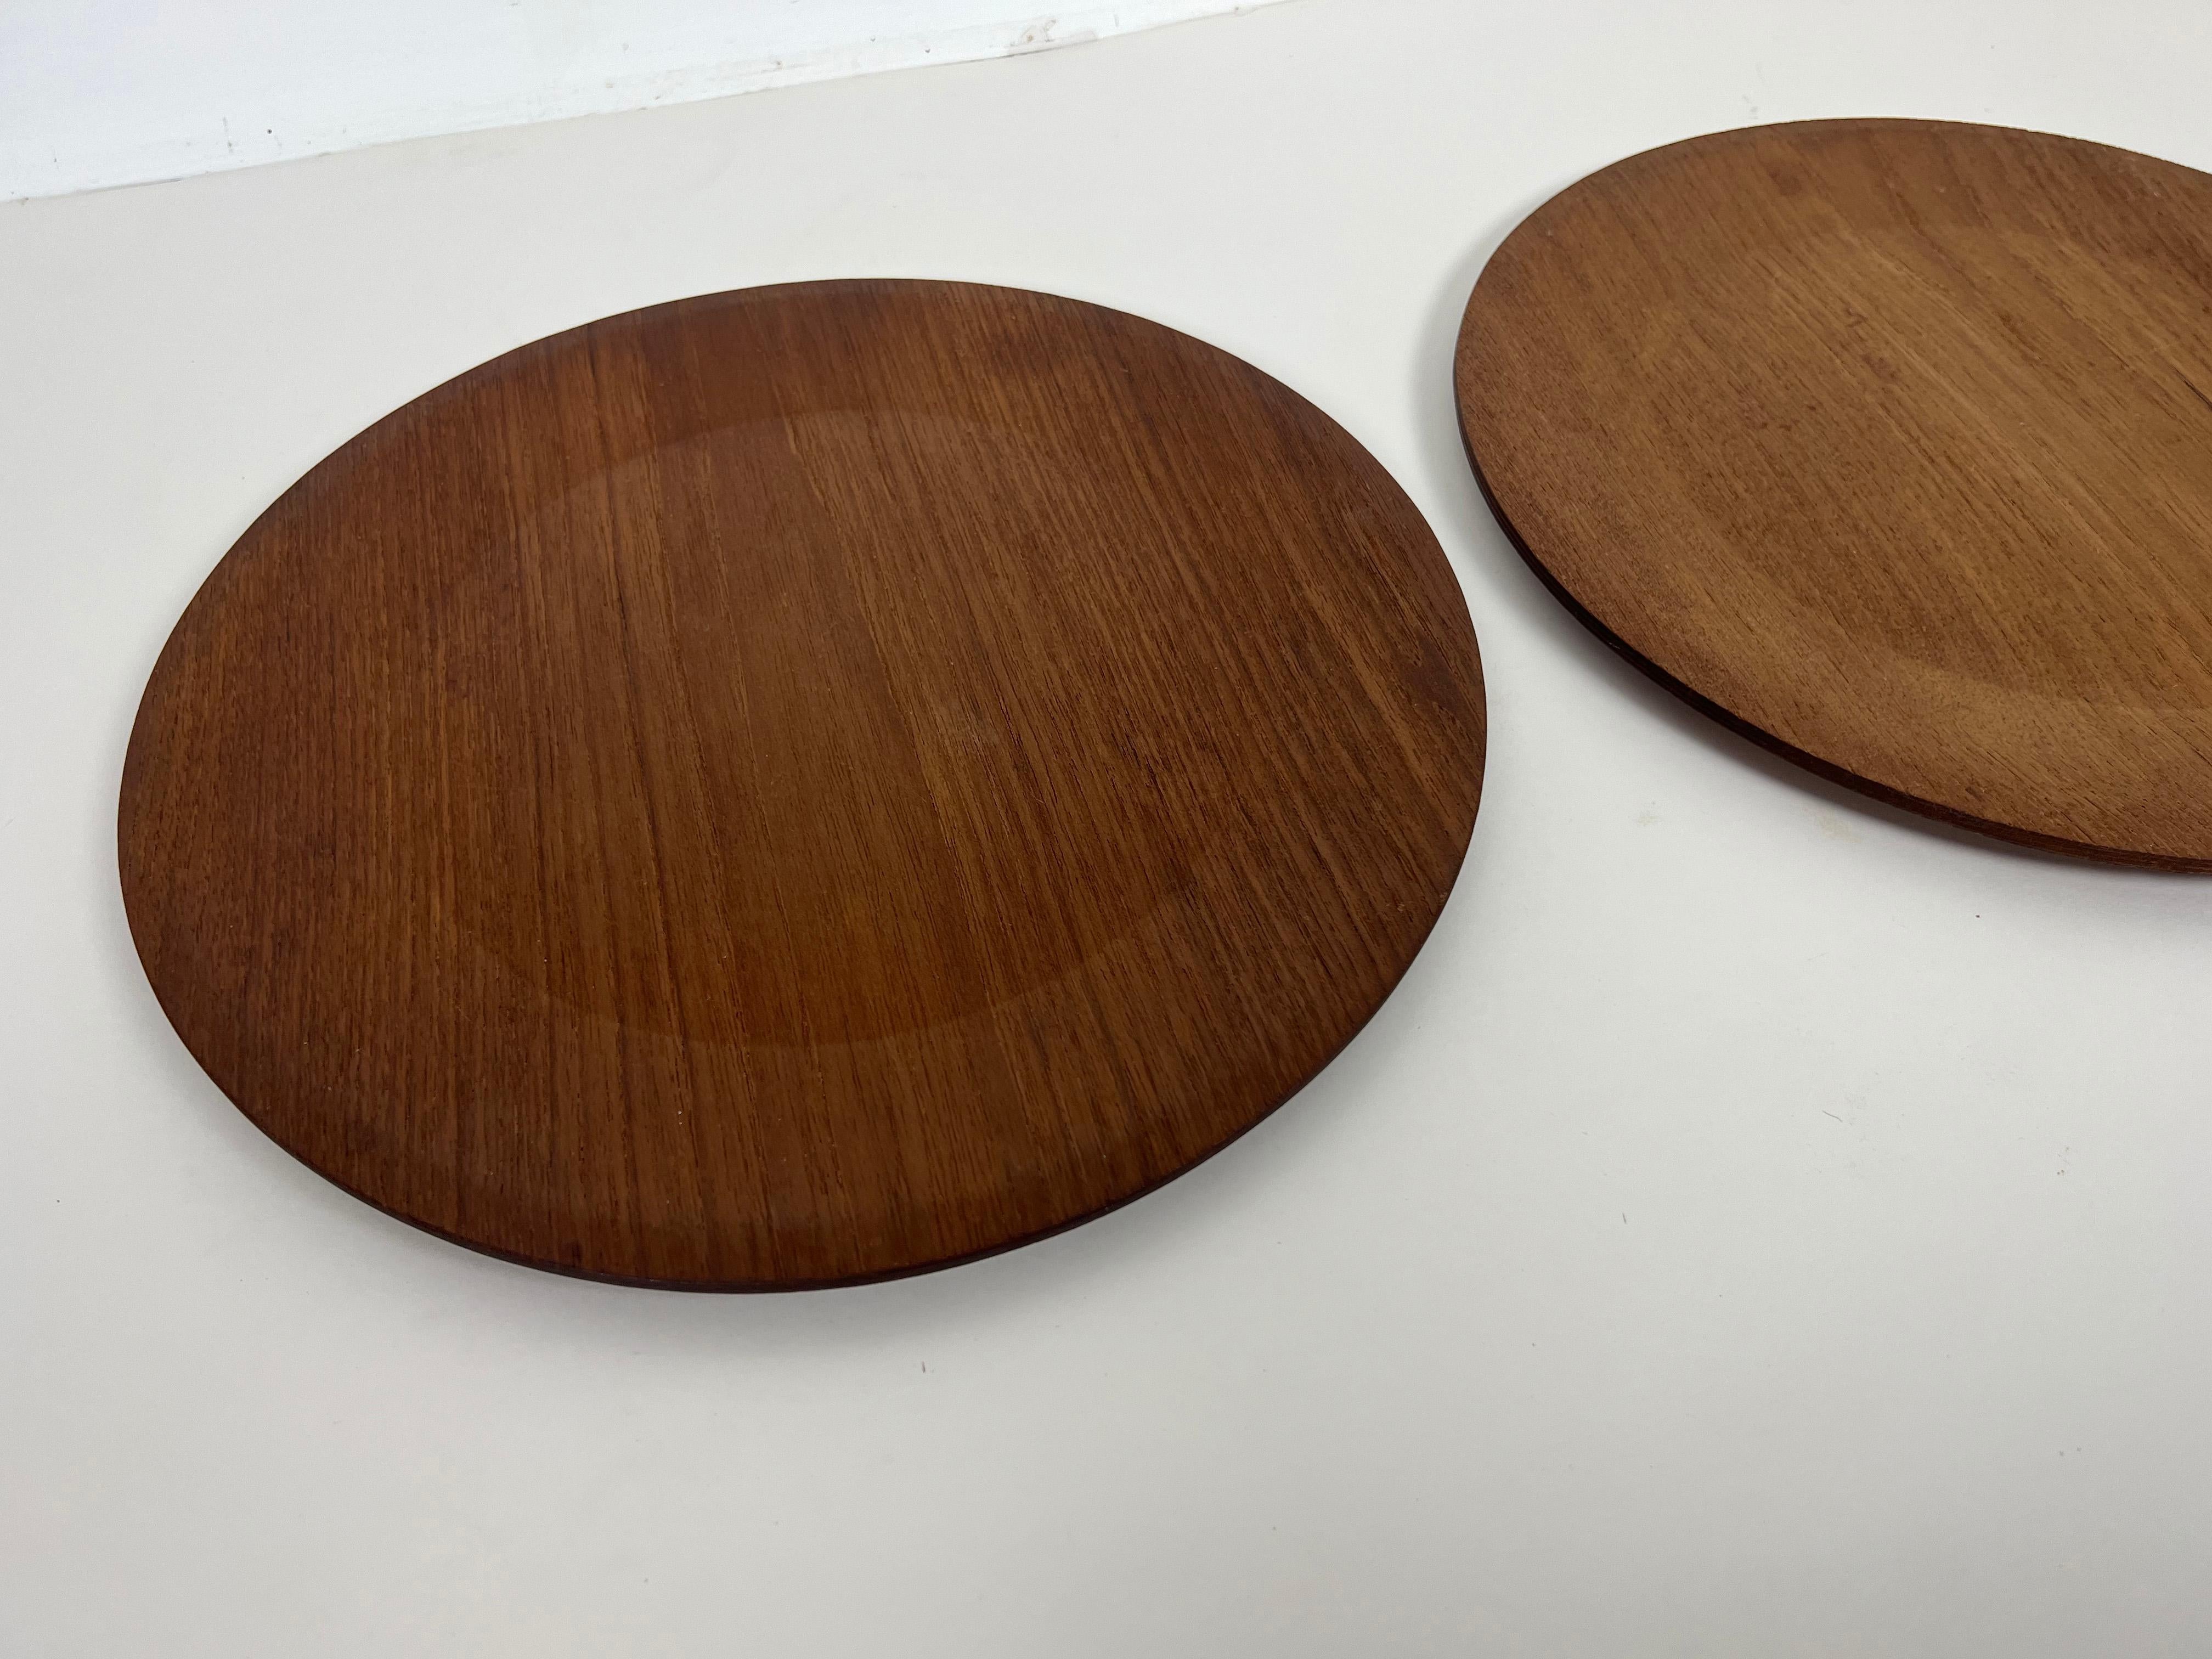 Vintage pair of pressed laminated teak wood plates by Hafnia.

Manufacturer: Hafnia

Origin: Denmark

Year: 1960s

Style: Mid-Century Modern / Scandinavian / Danish Modern

Dimensions: 11